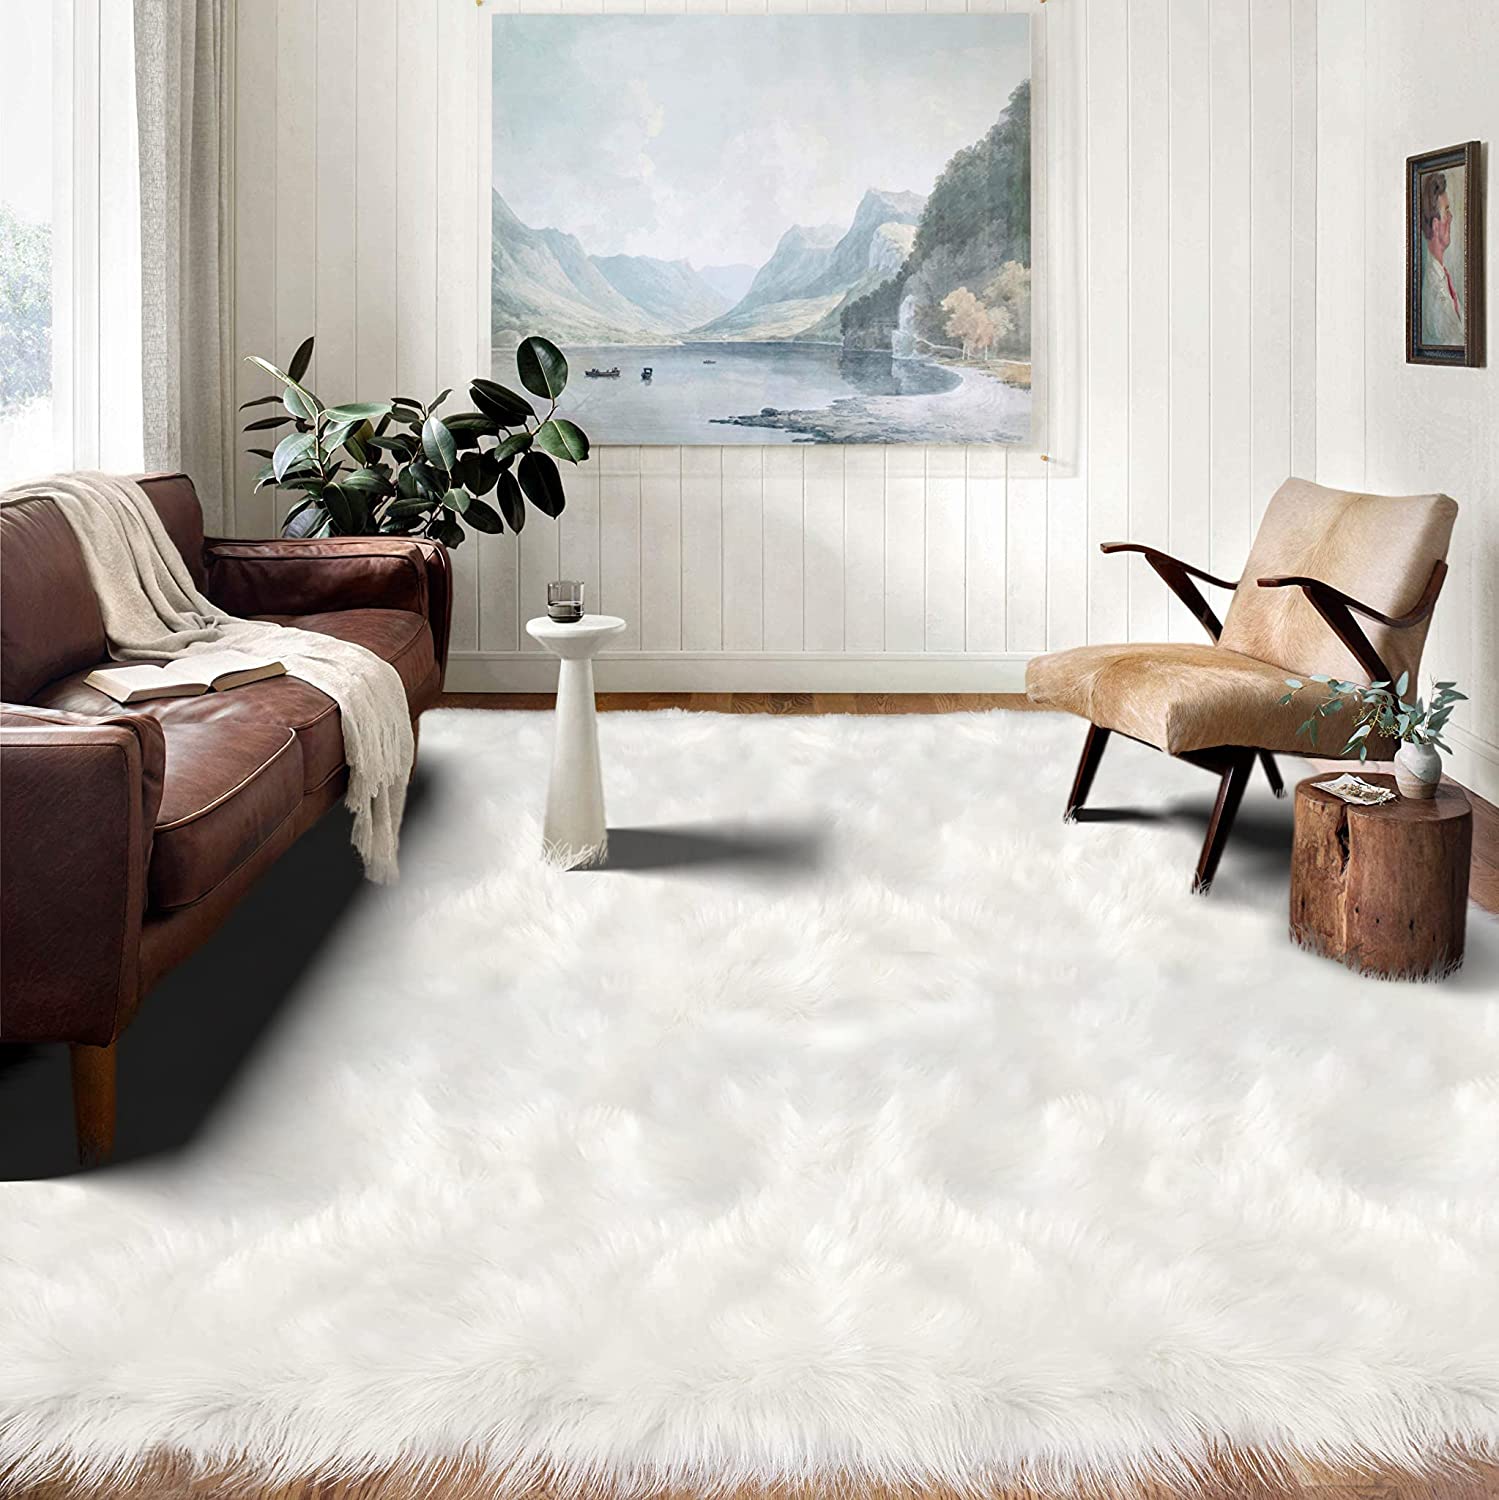 Latepis Super Large 9x12 Faux Fur Rug Area Rug for Living Room Floor Sofa  Fluffy Sheepskin Rug for Bedroom, White